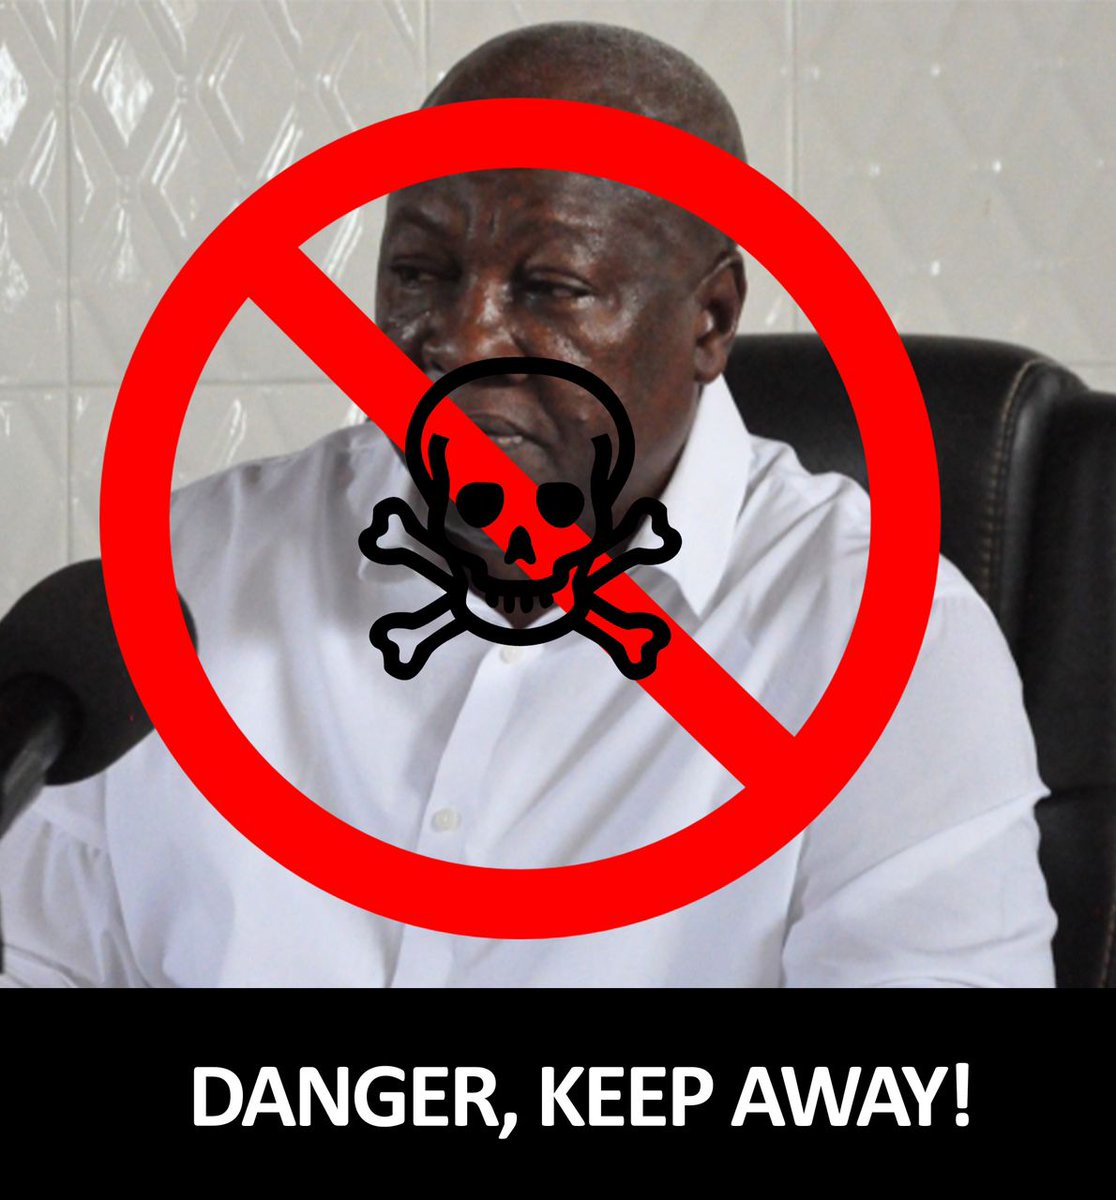 John Mahama is very dangerous and a thief. Keep away from him. 
#MahamaIsAThief